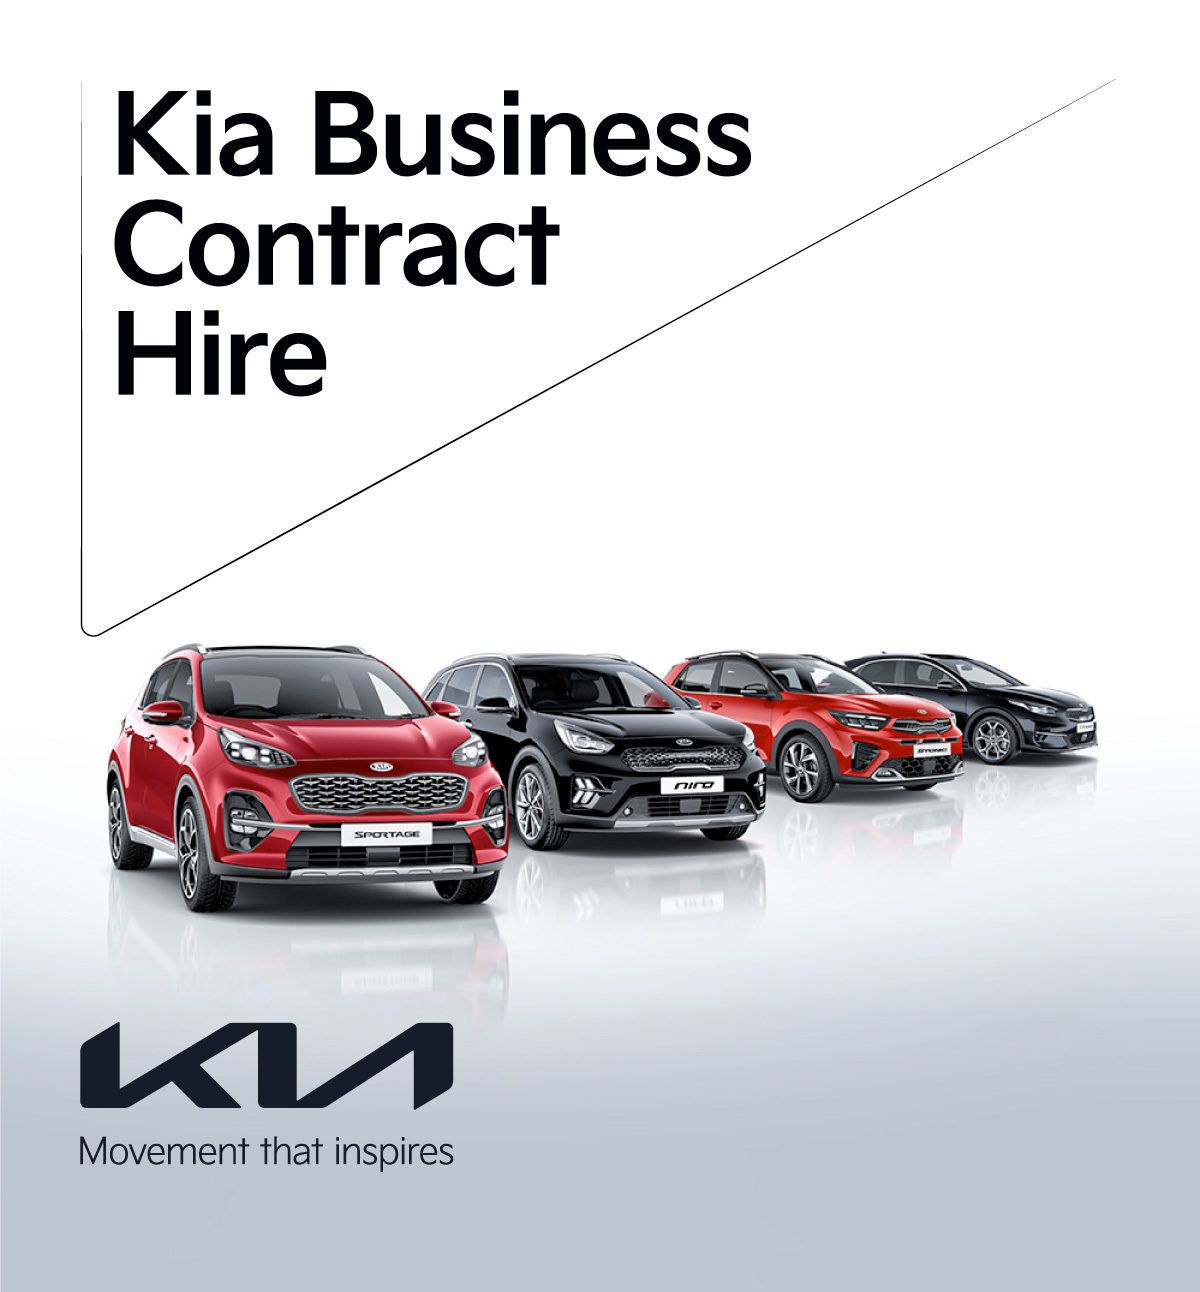 KIA Business Contract Hire